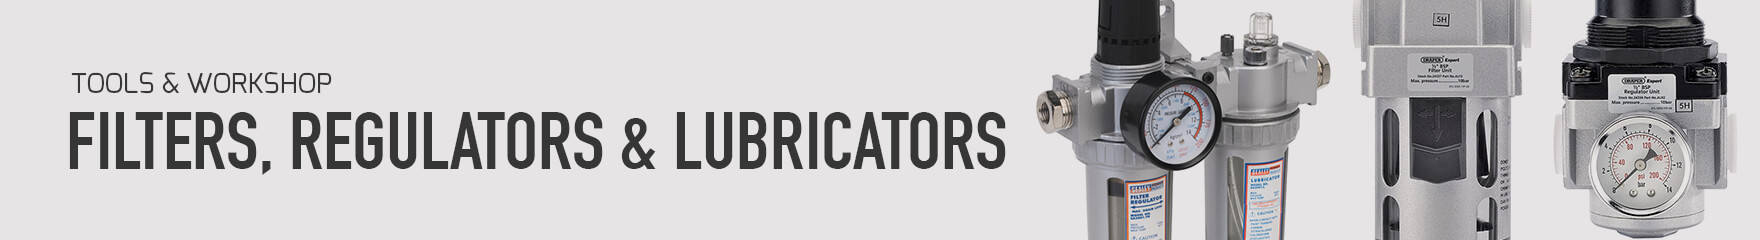 Filters, Regulators & Lubricators